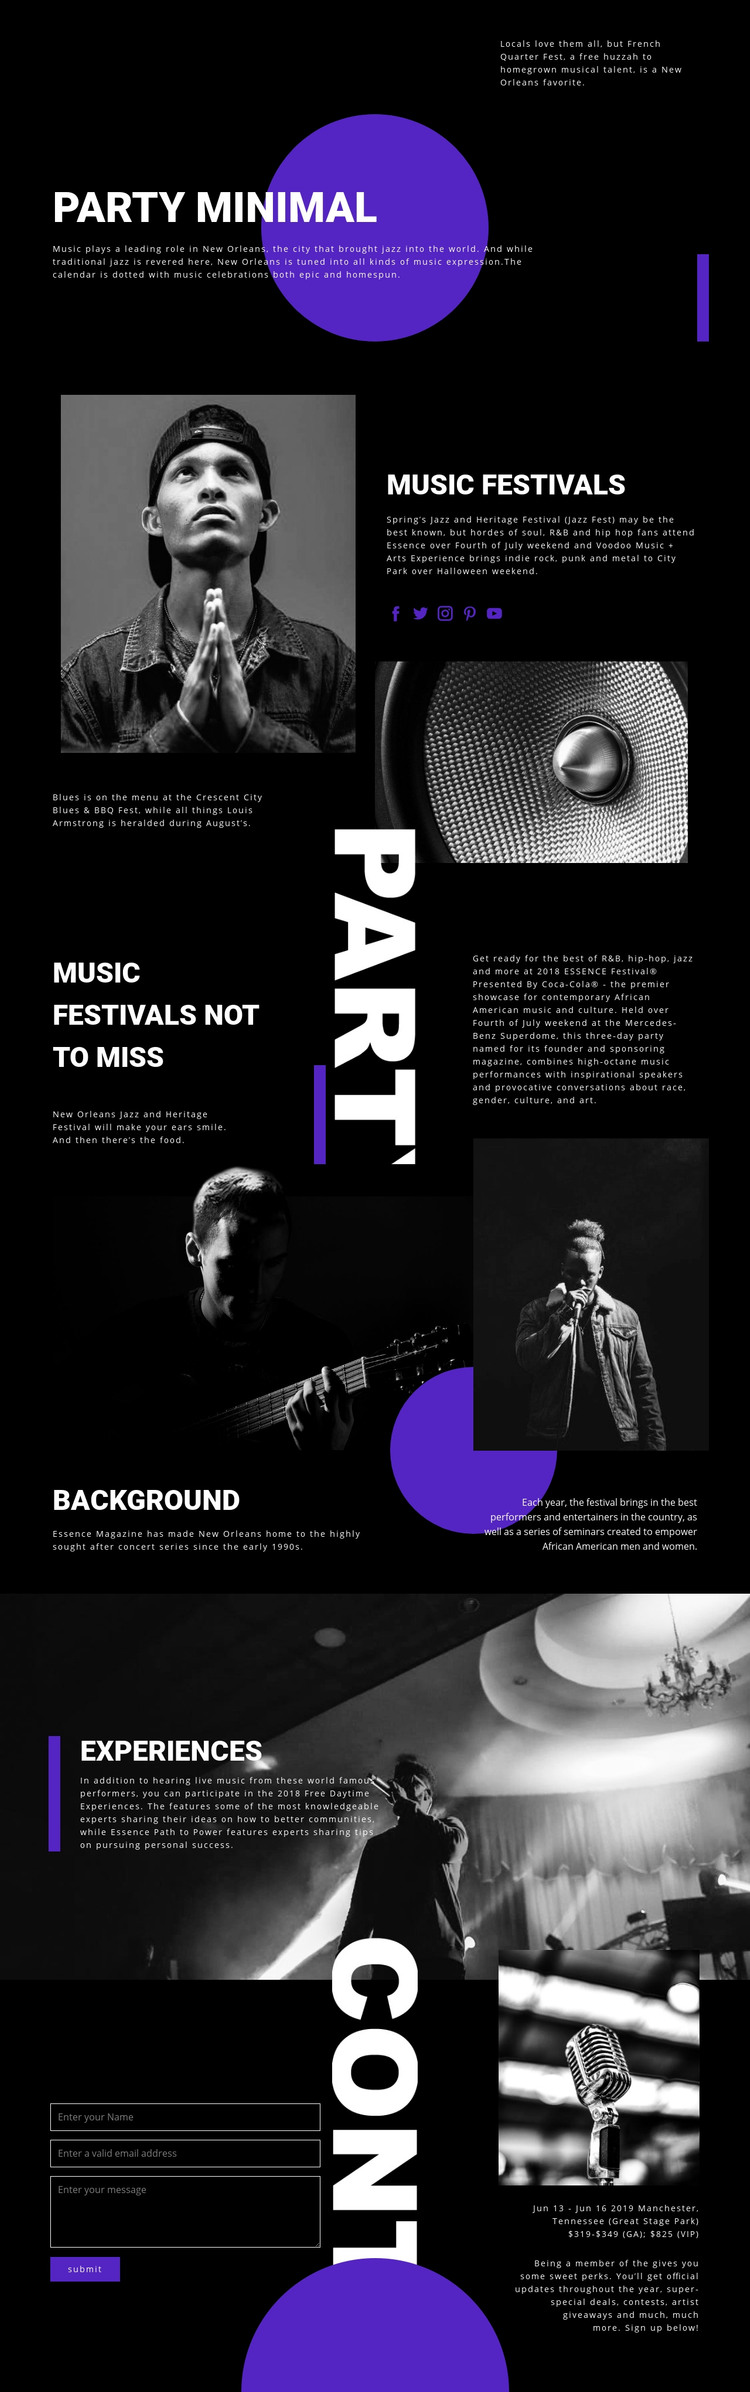 Music Festival Homepage Design